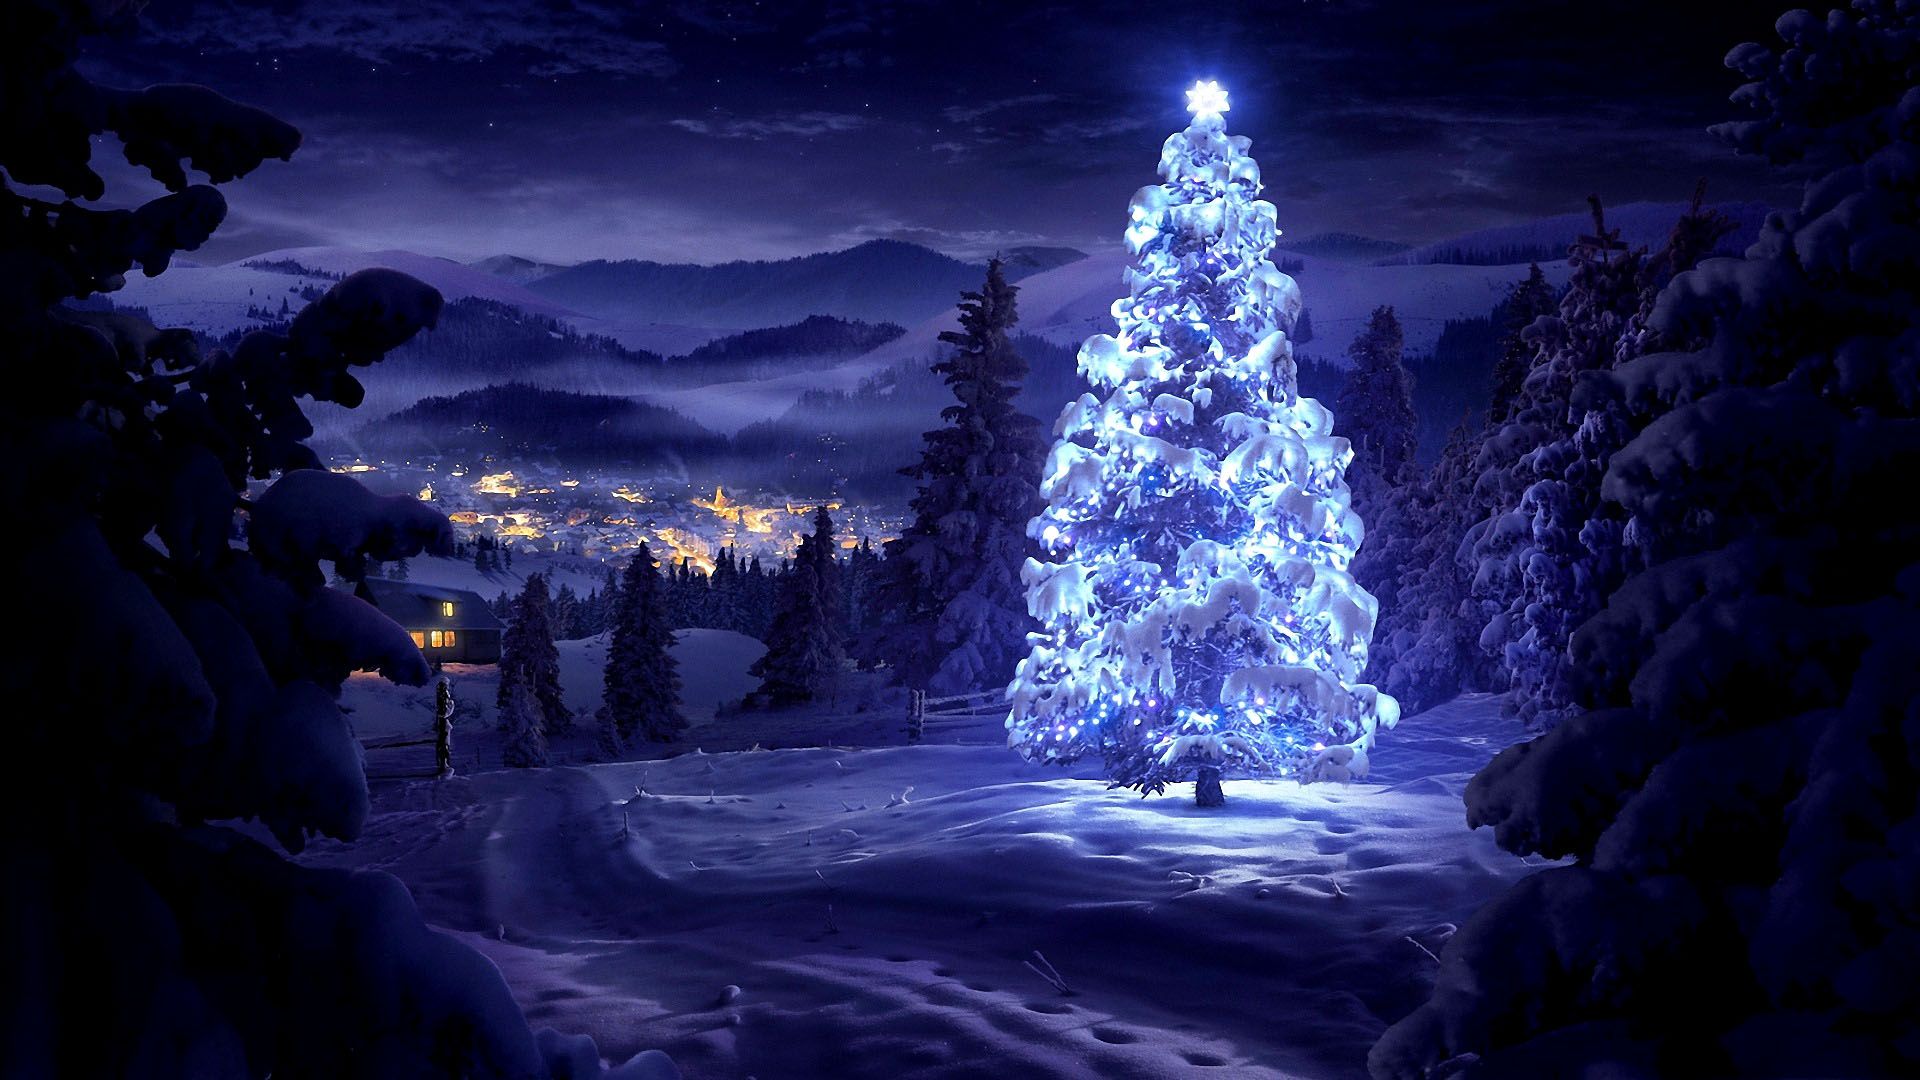 Christmas Tree 2016, Pics, Picture, Image, Photo. Full Desktop Background